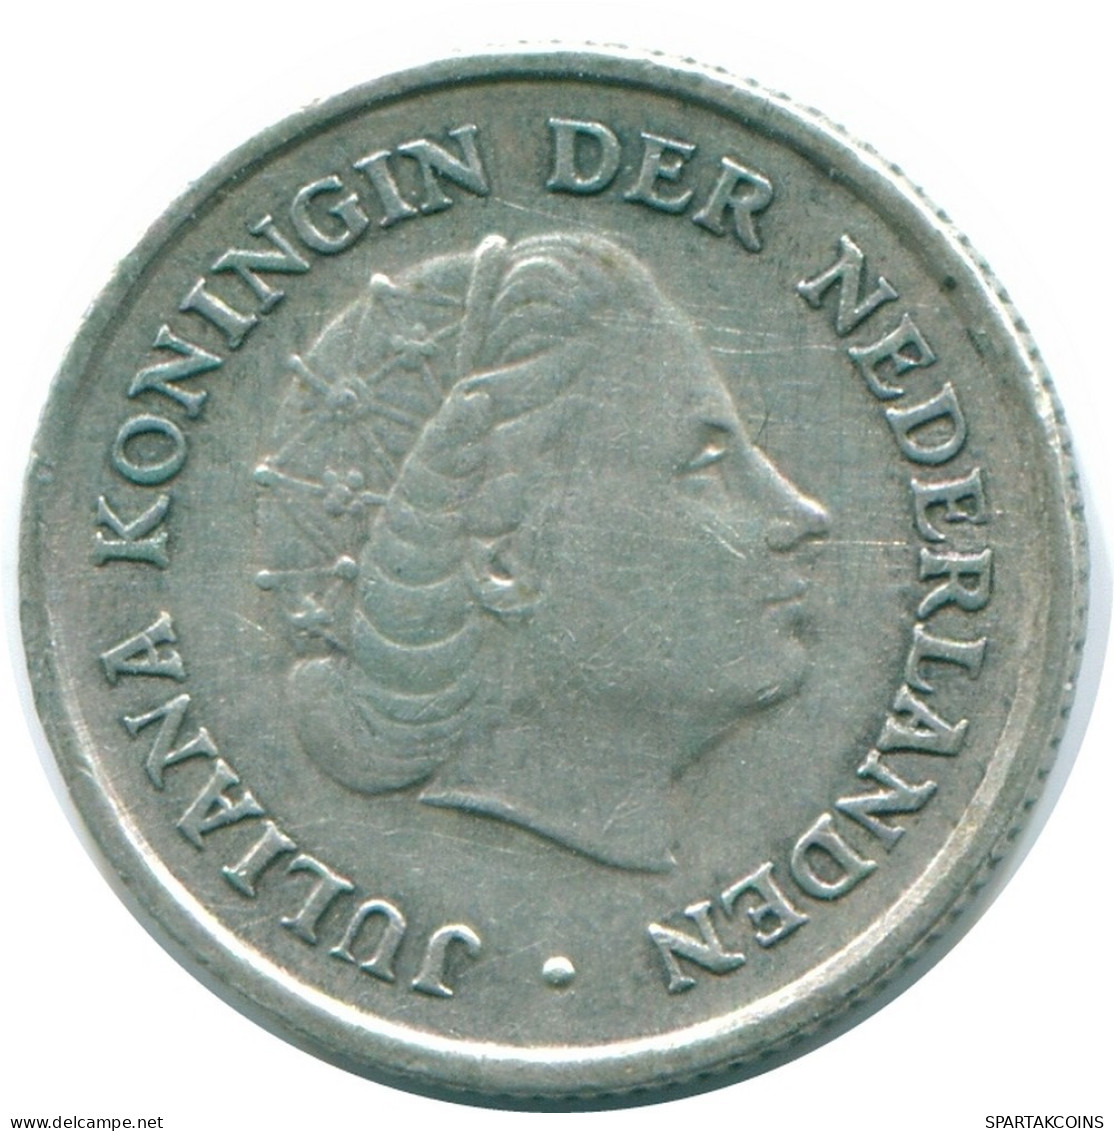 1/10 GULDEN 1957 NETHERLANDS ANTILLES SILVER Colonial Coin #NL12159.3.U.A - Antilles Néerlandaises